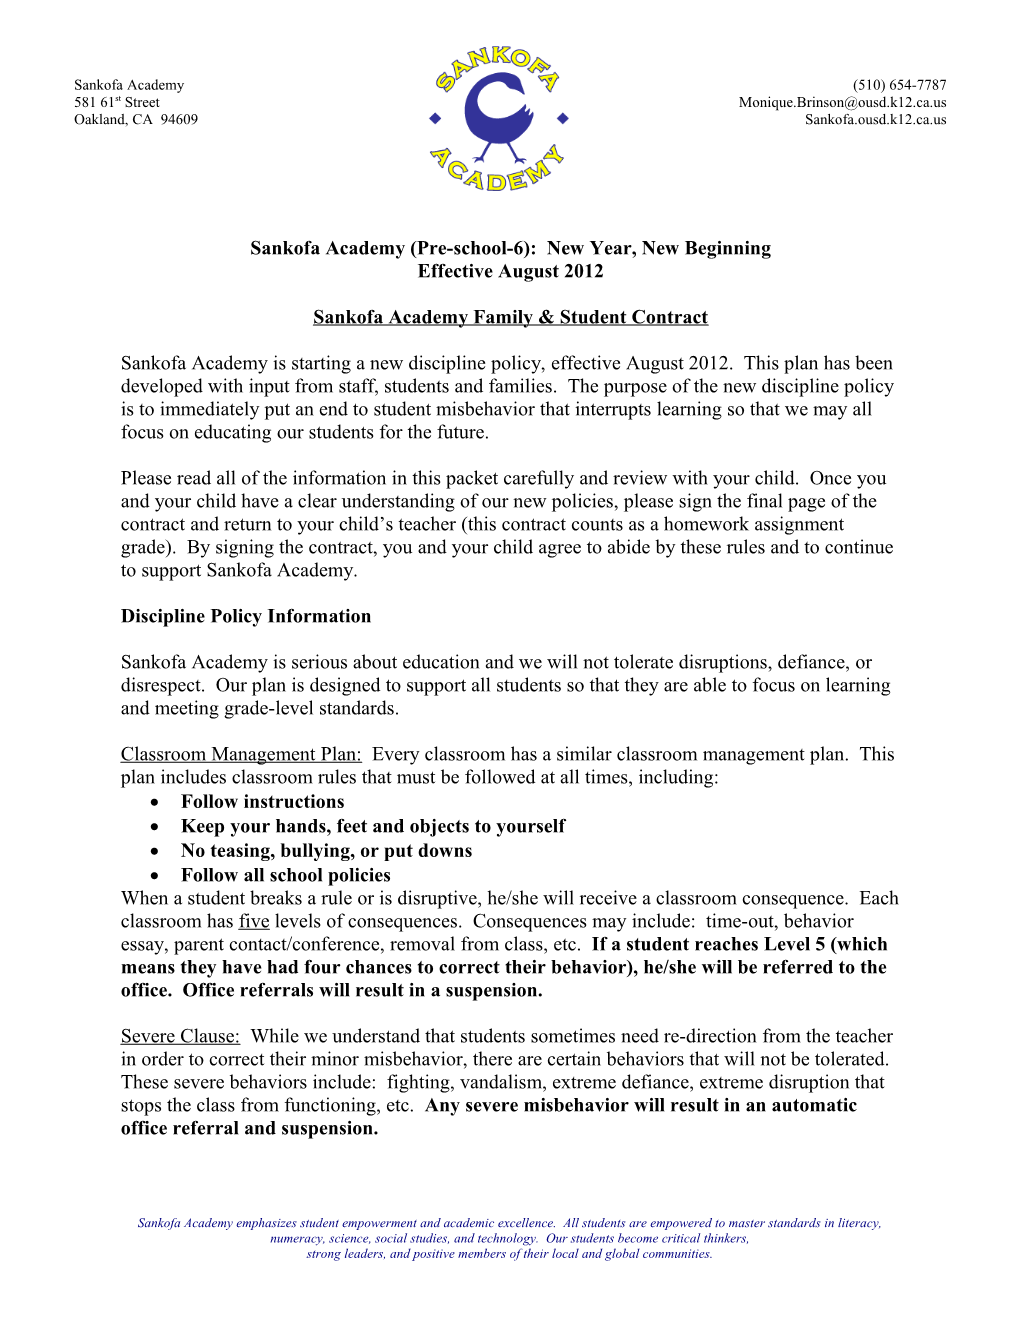 Sankofa Academy (Pre-School-6): New Year, New Beginning